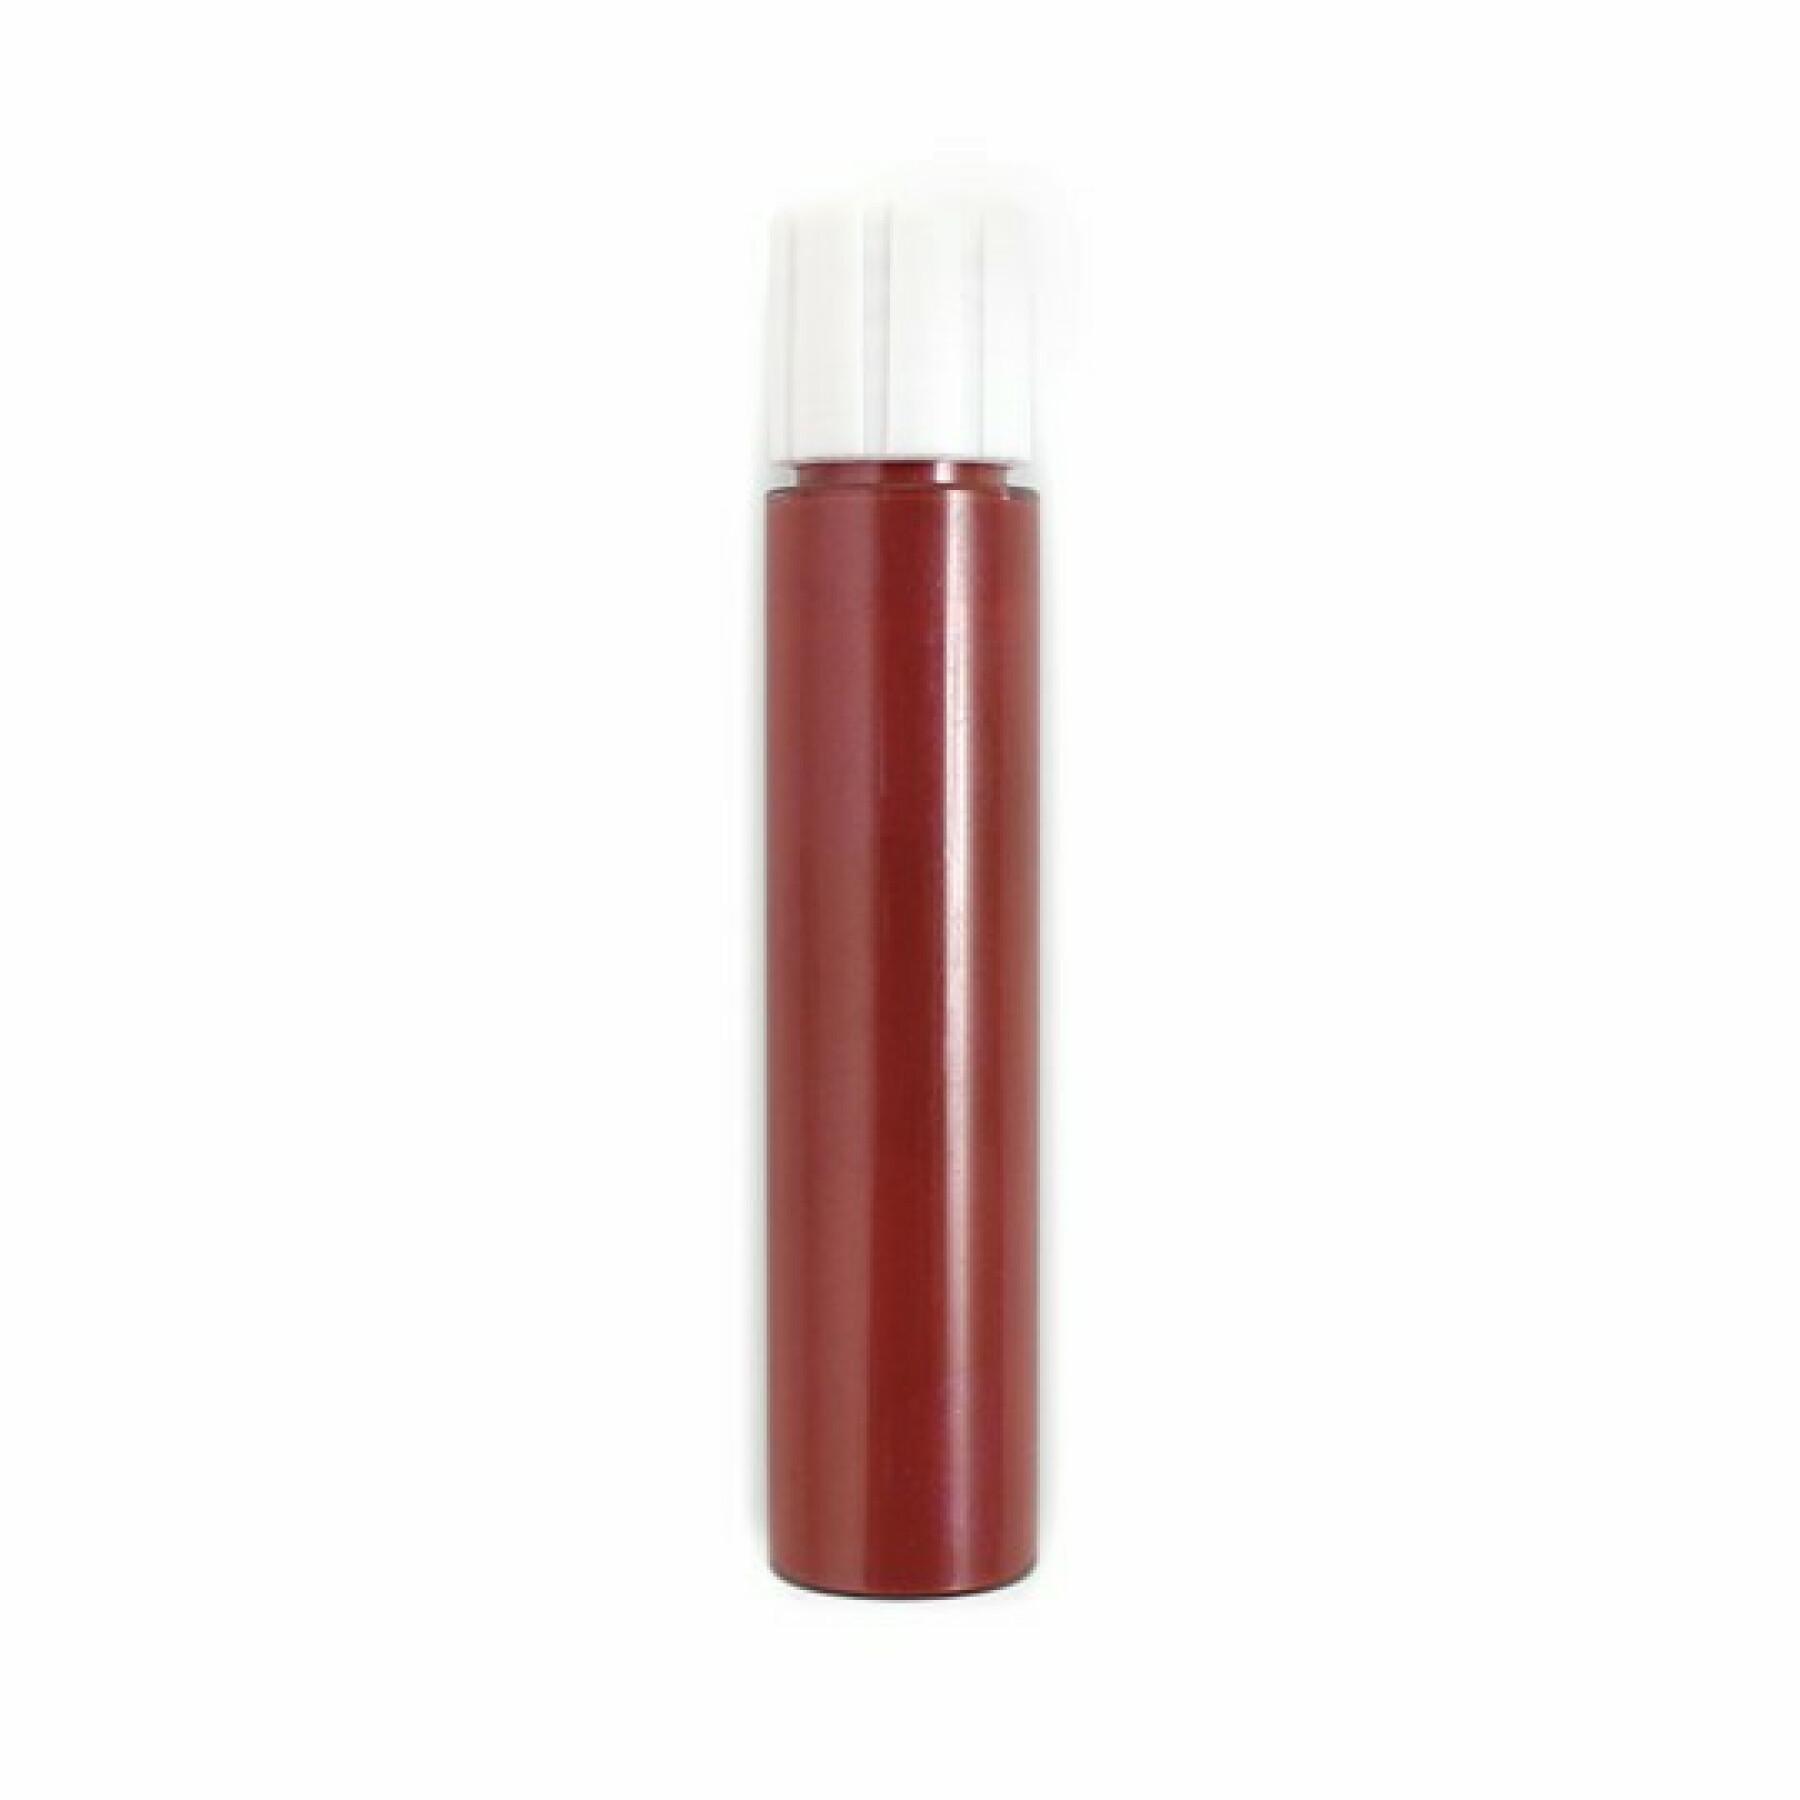 Lip polish refill 036 cherry red woman Zao - 3,8 ml